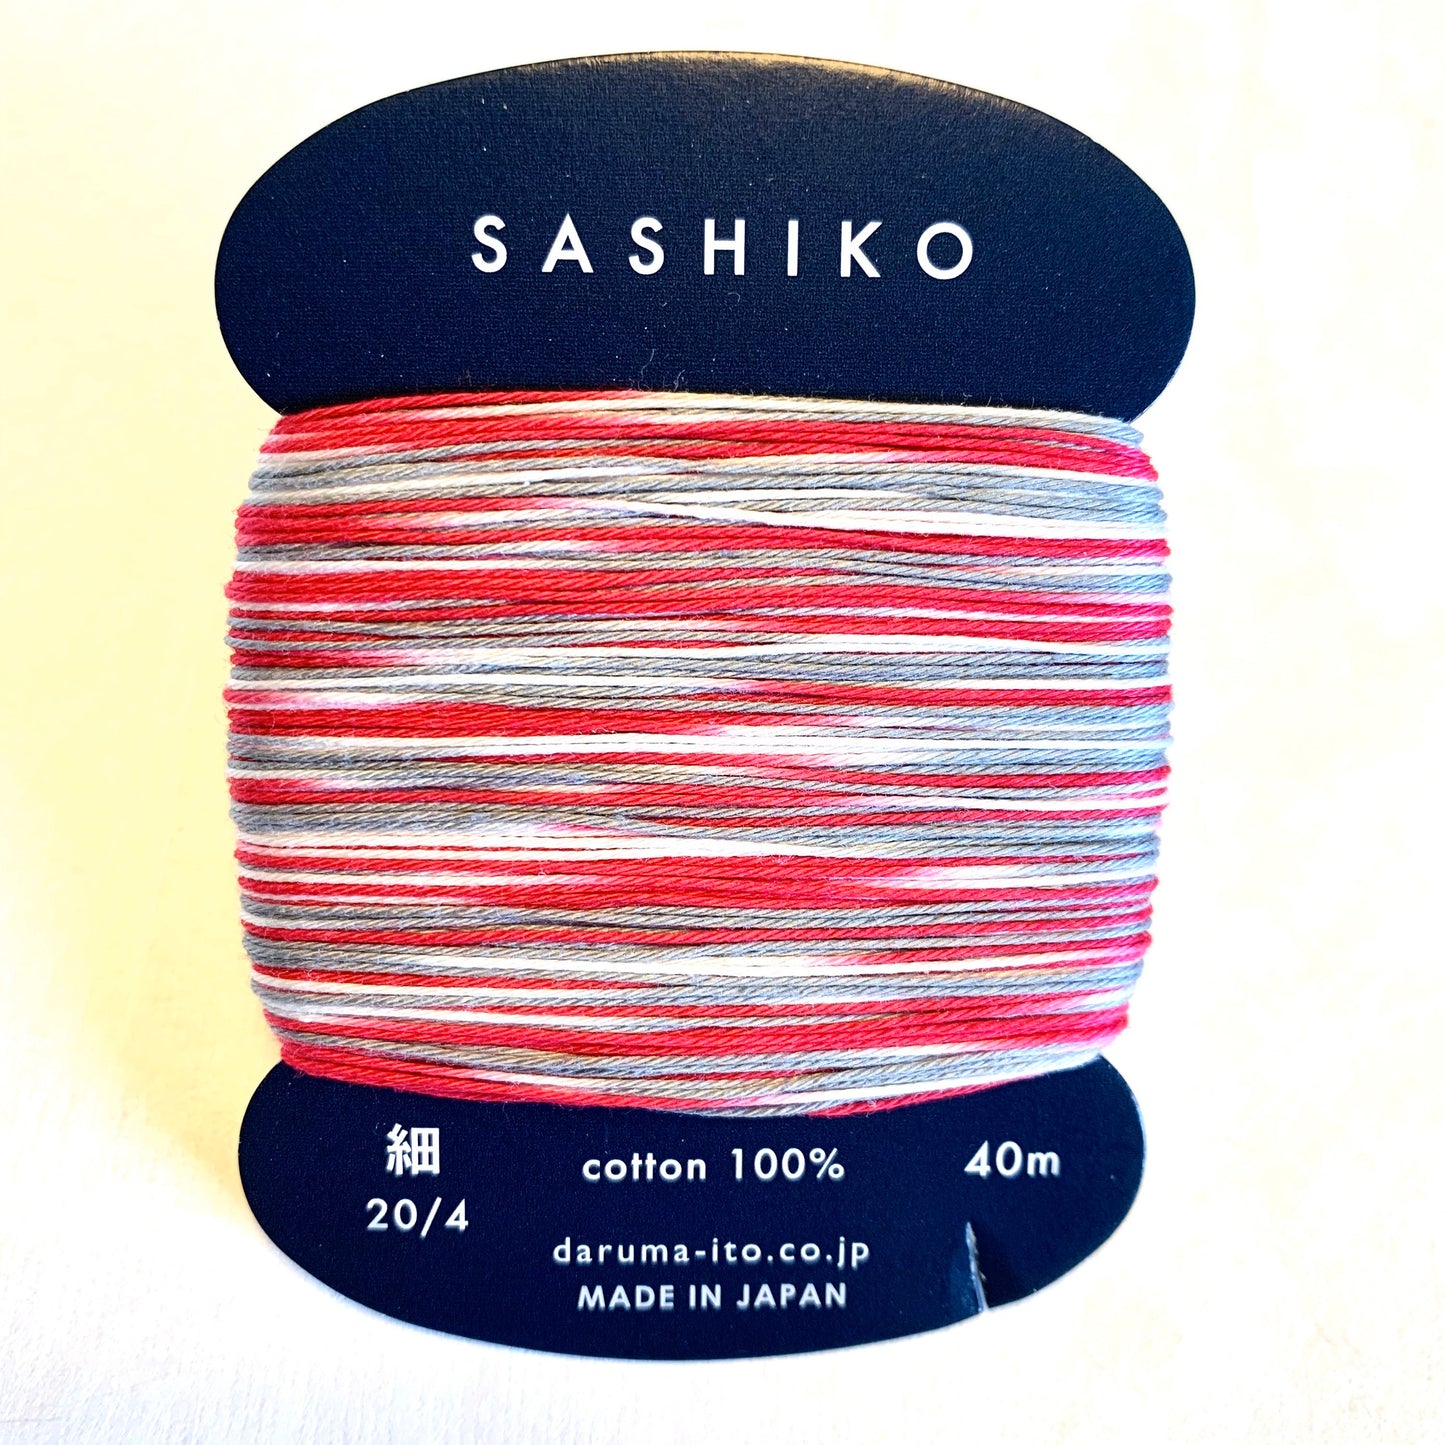 Daruma #403 MORNING GLORY variegated red white and gray Japanese Cotton SASHIKO thread 40 meter skein 20/4